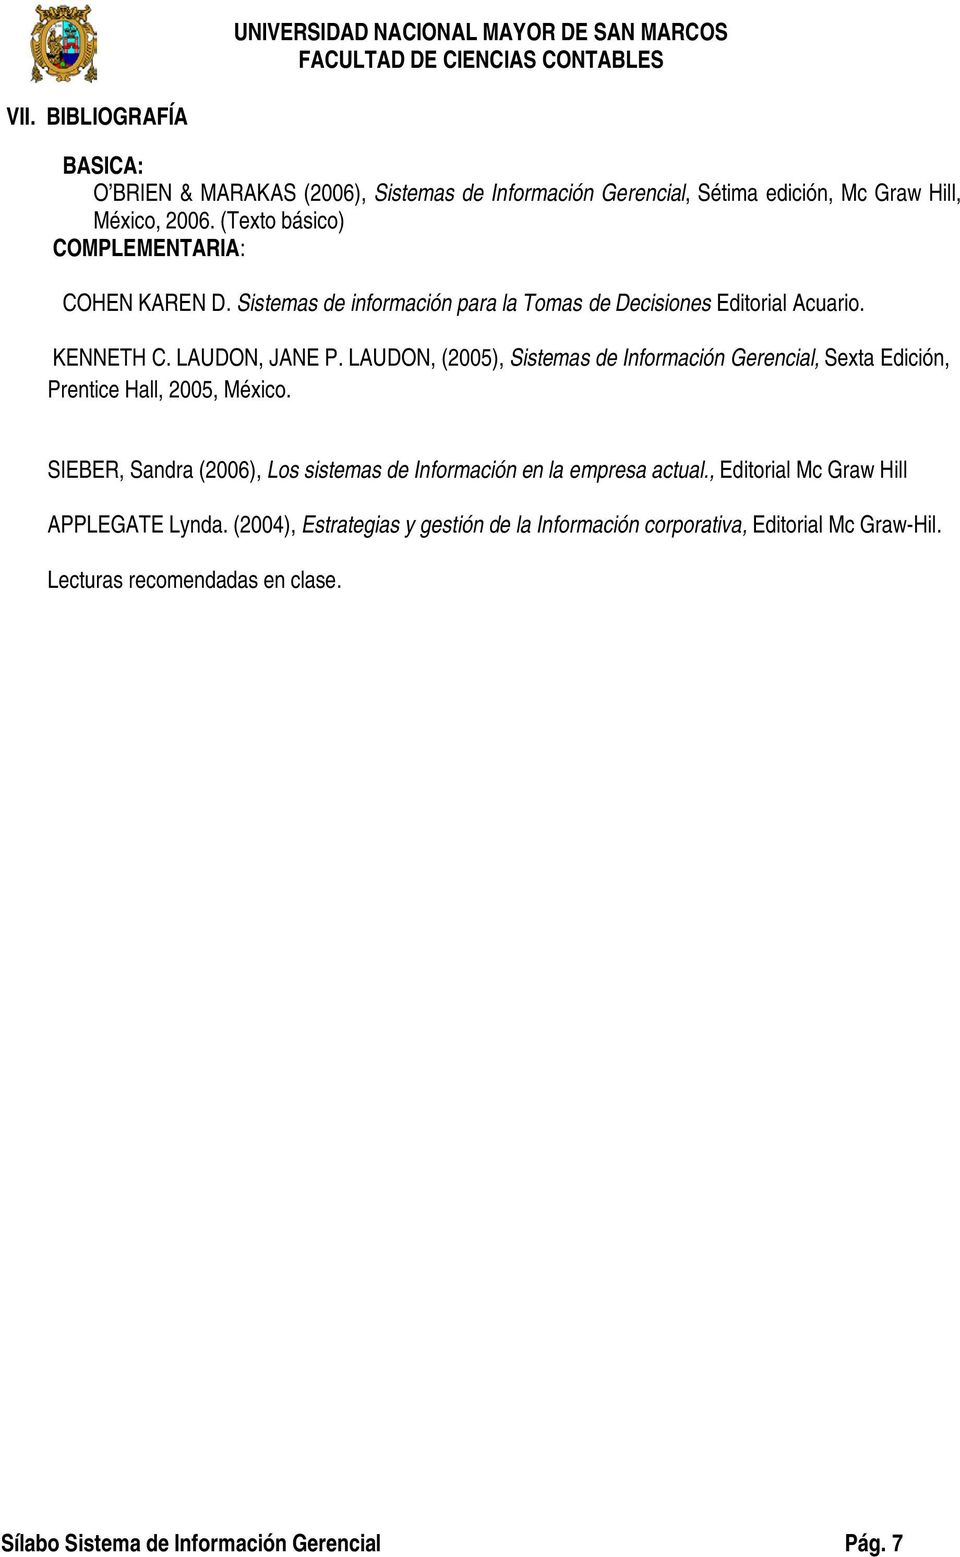 LAUDON, (2005), Sistemas de Información Gerencial, Sexta Edición, Prentice Hall, 2005, México.